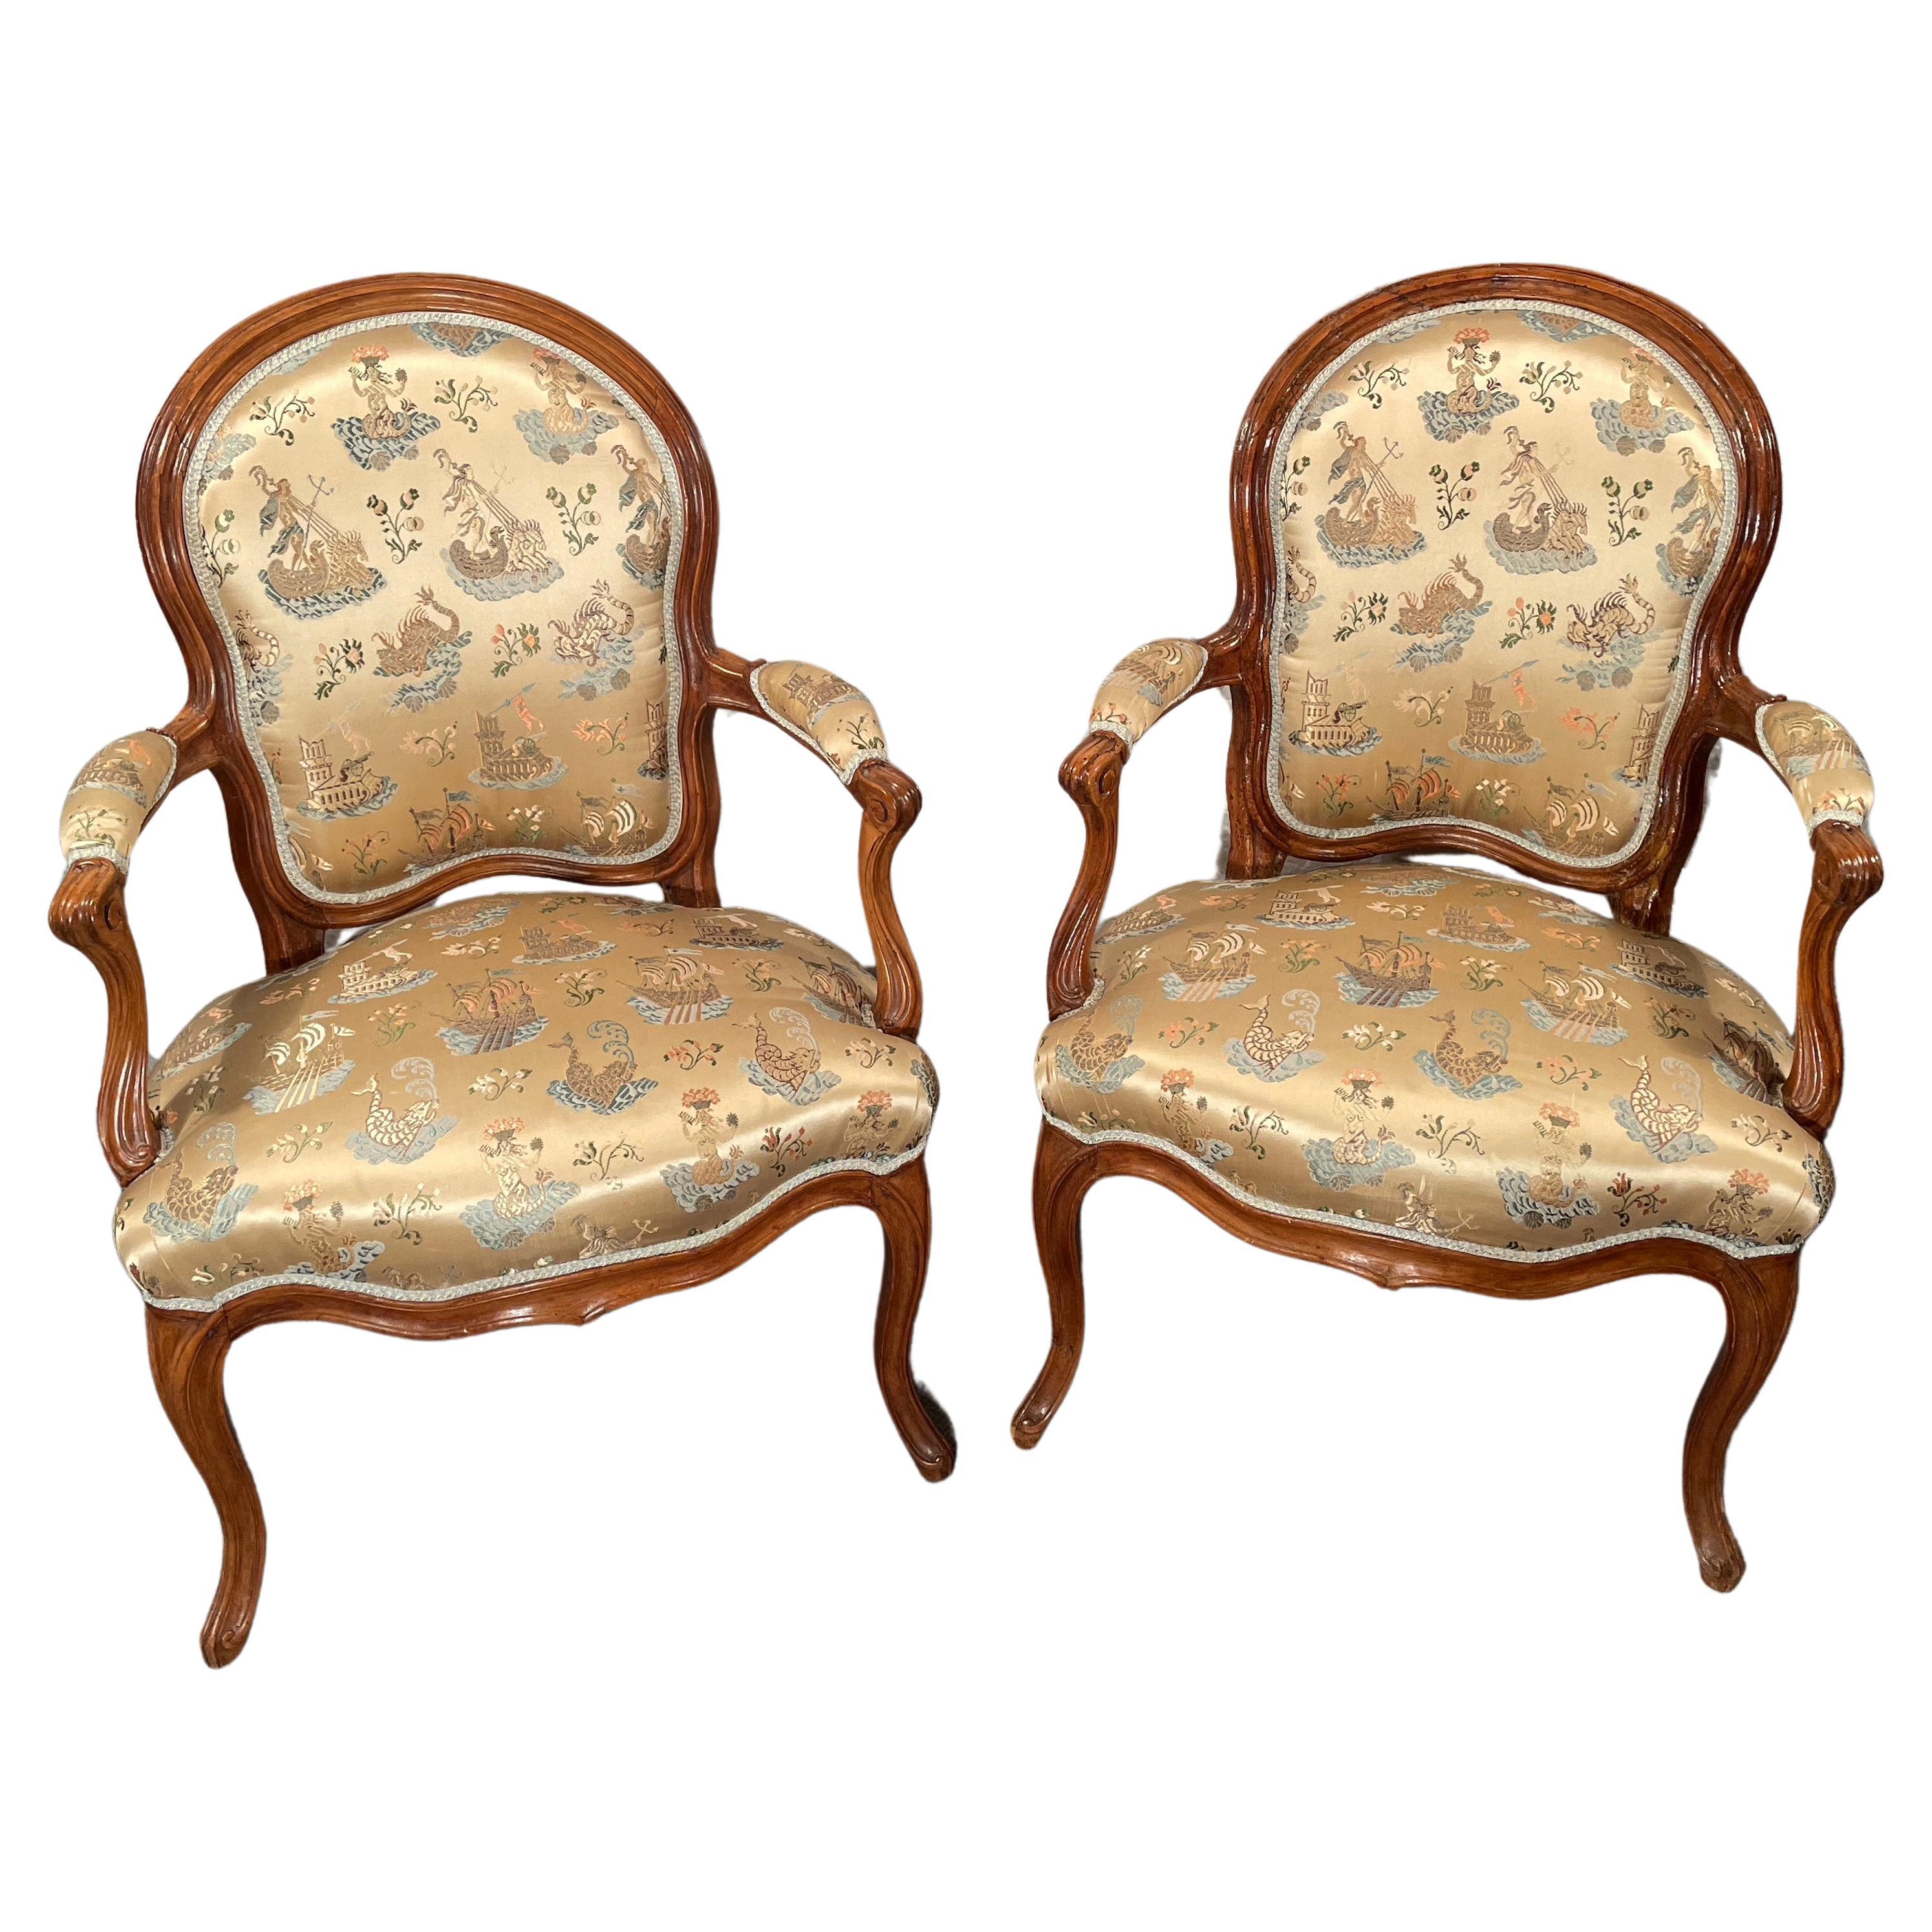 Paar Louis XV.-Sessel aus dem 18. Jahrhundert, Frankreich 1760